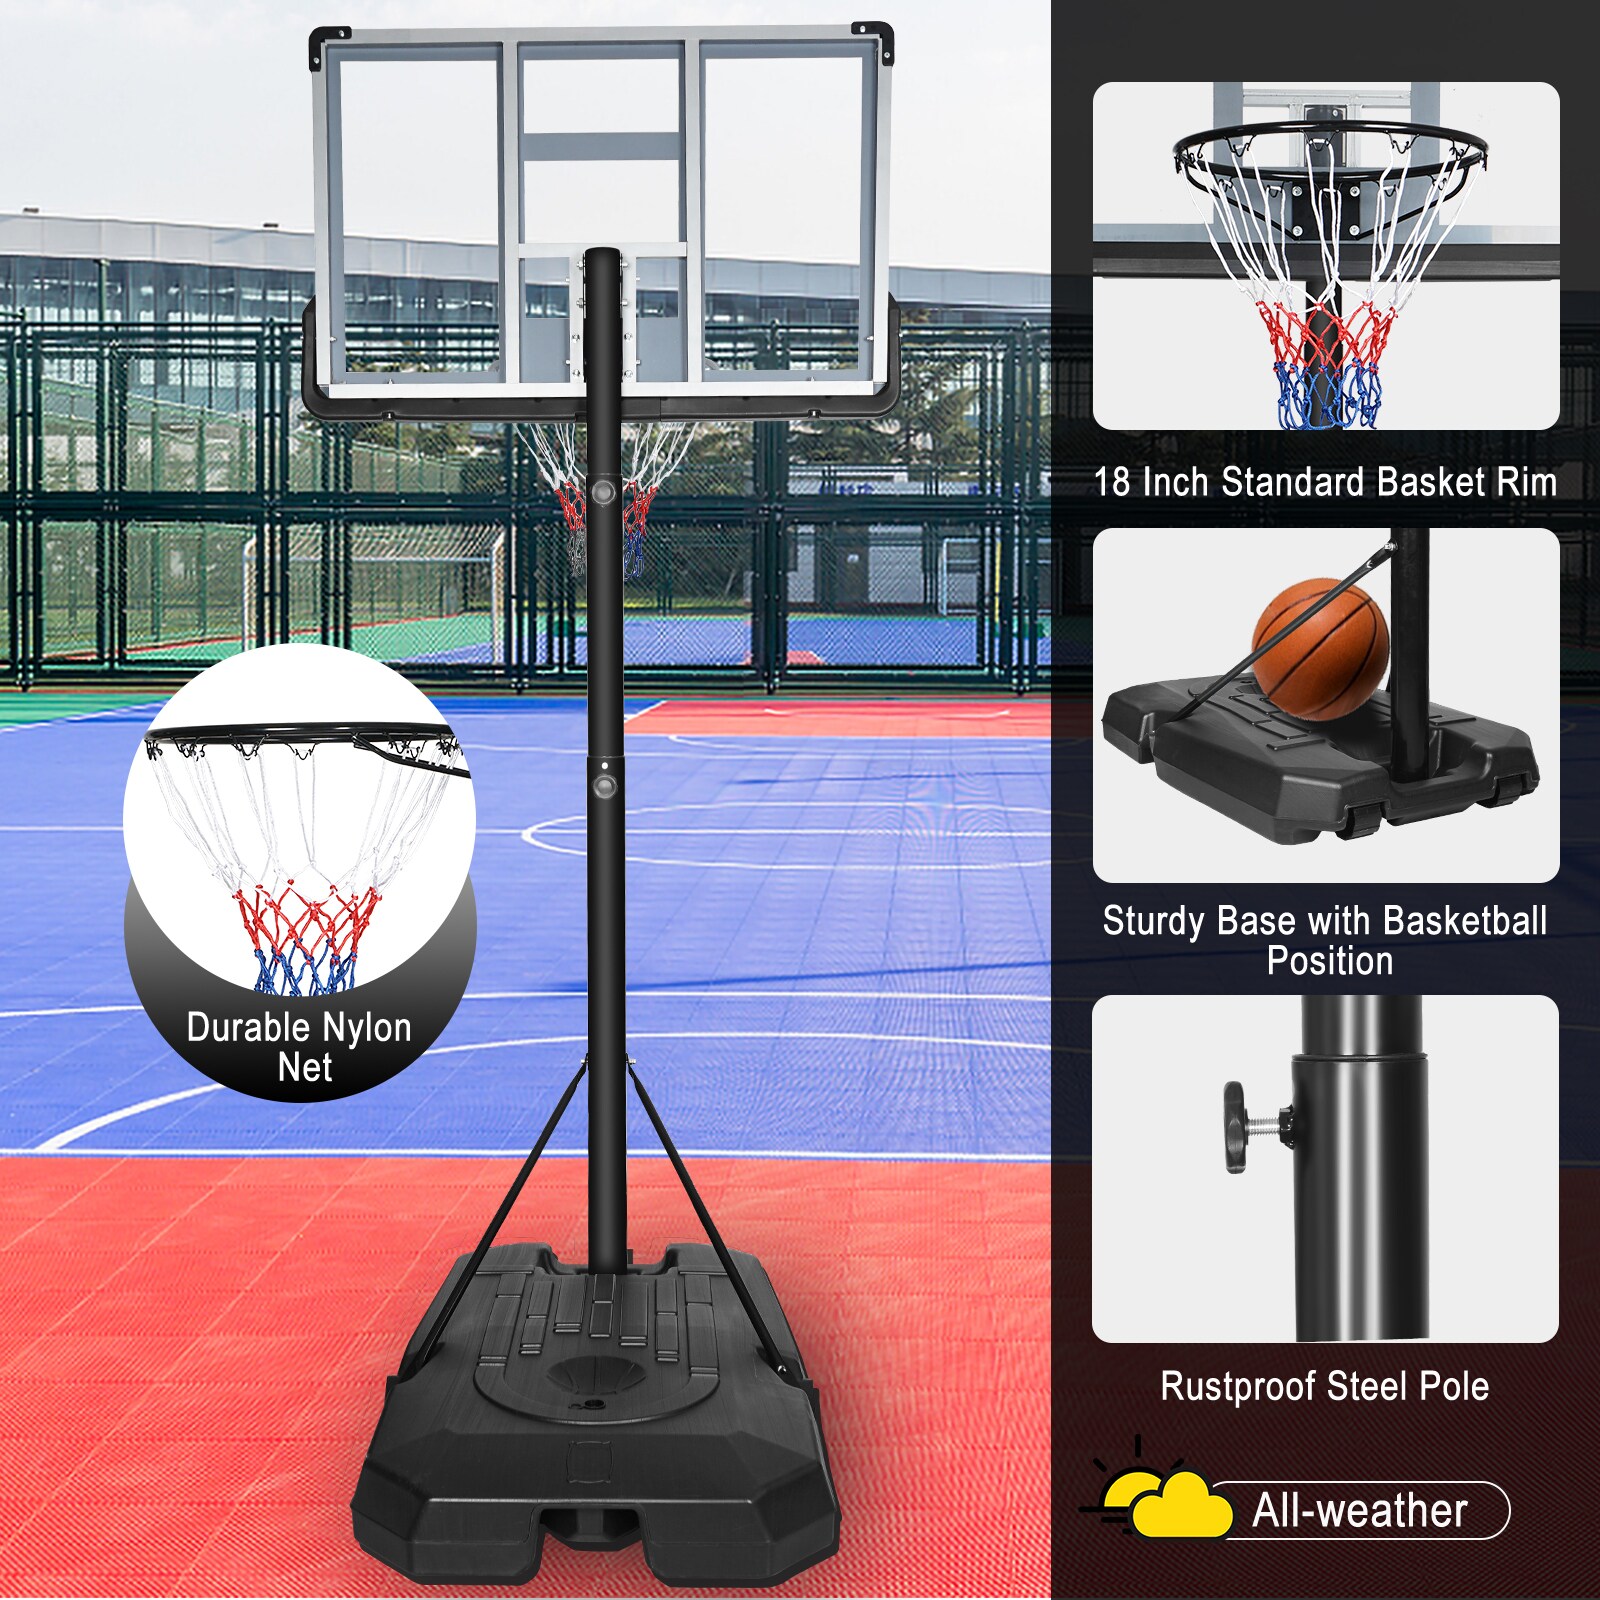 Basketball Hoop & Backboard Dimensions & Drawings | Dimensions.com